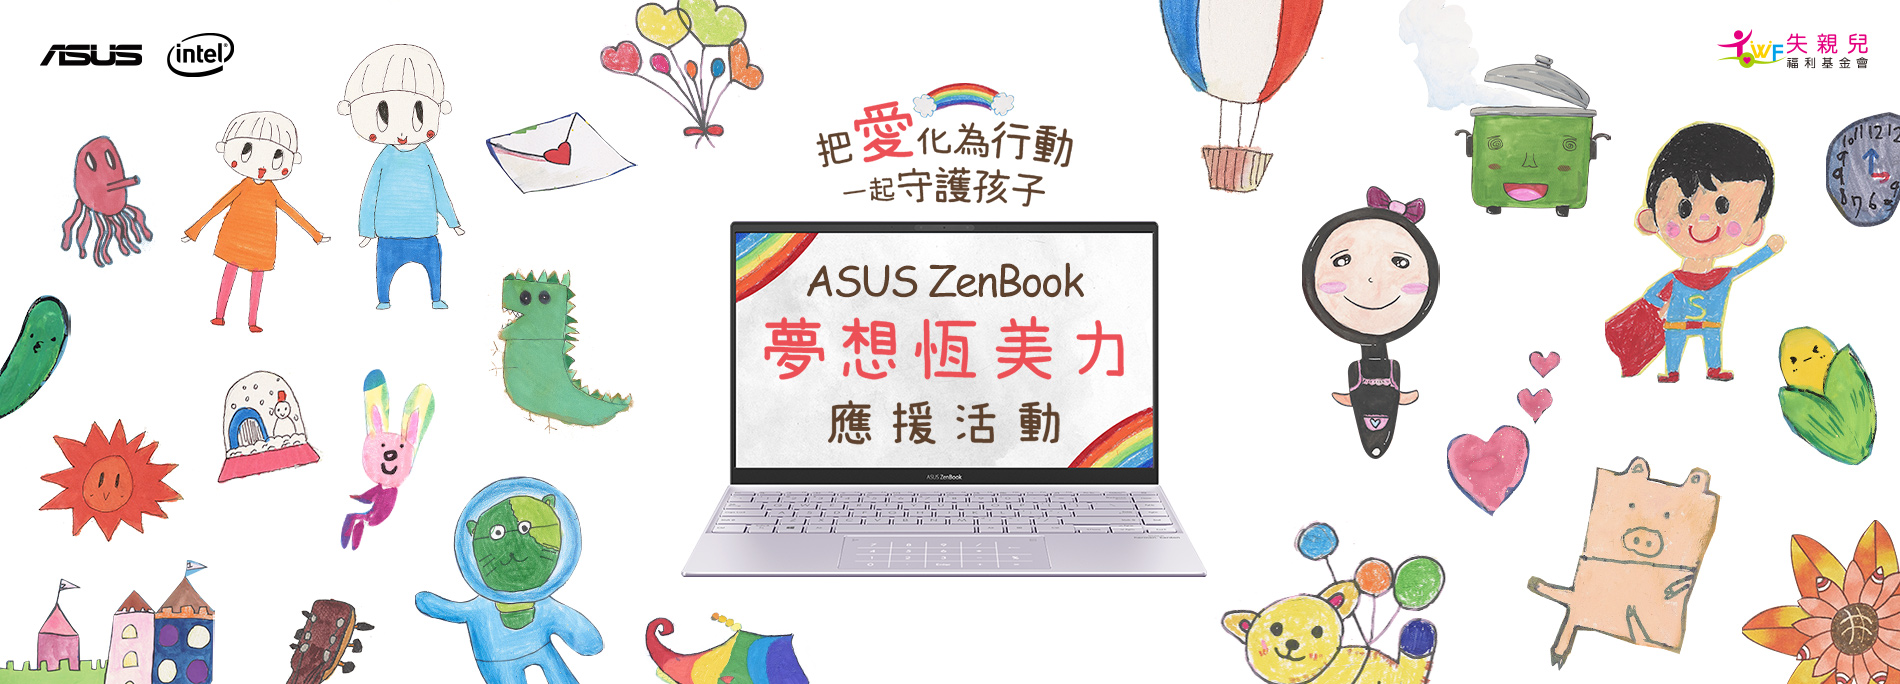 ASUS ZenBook 夢想恆美力應援活動